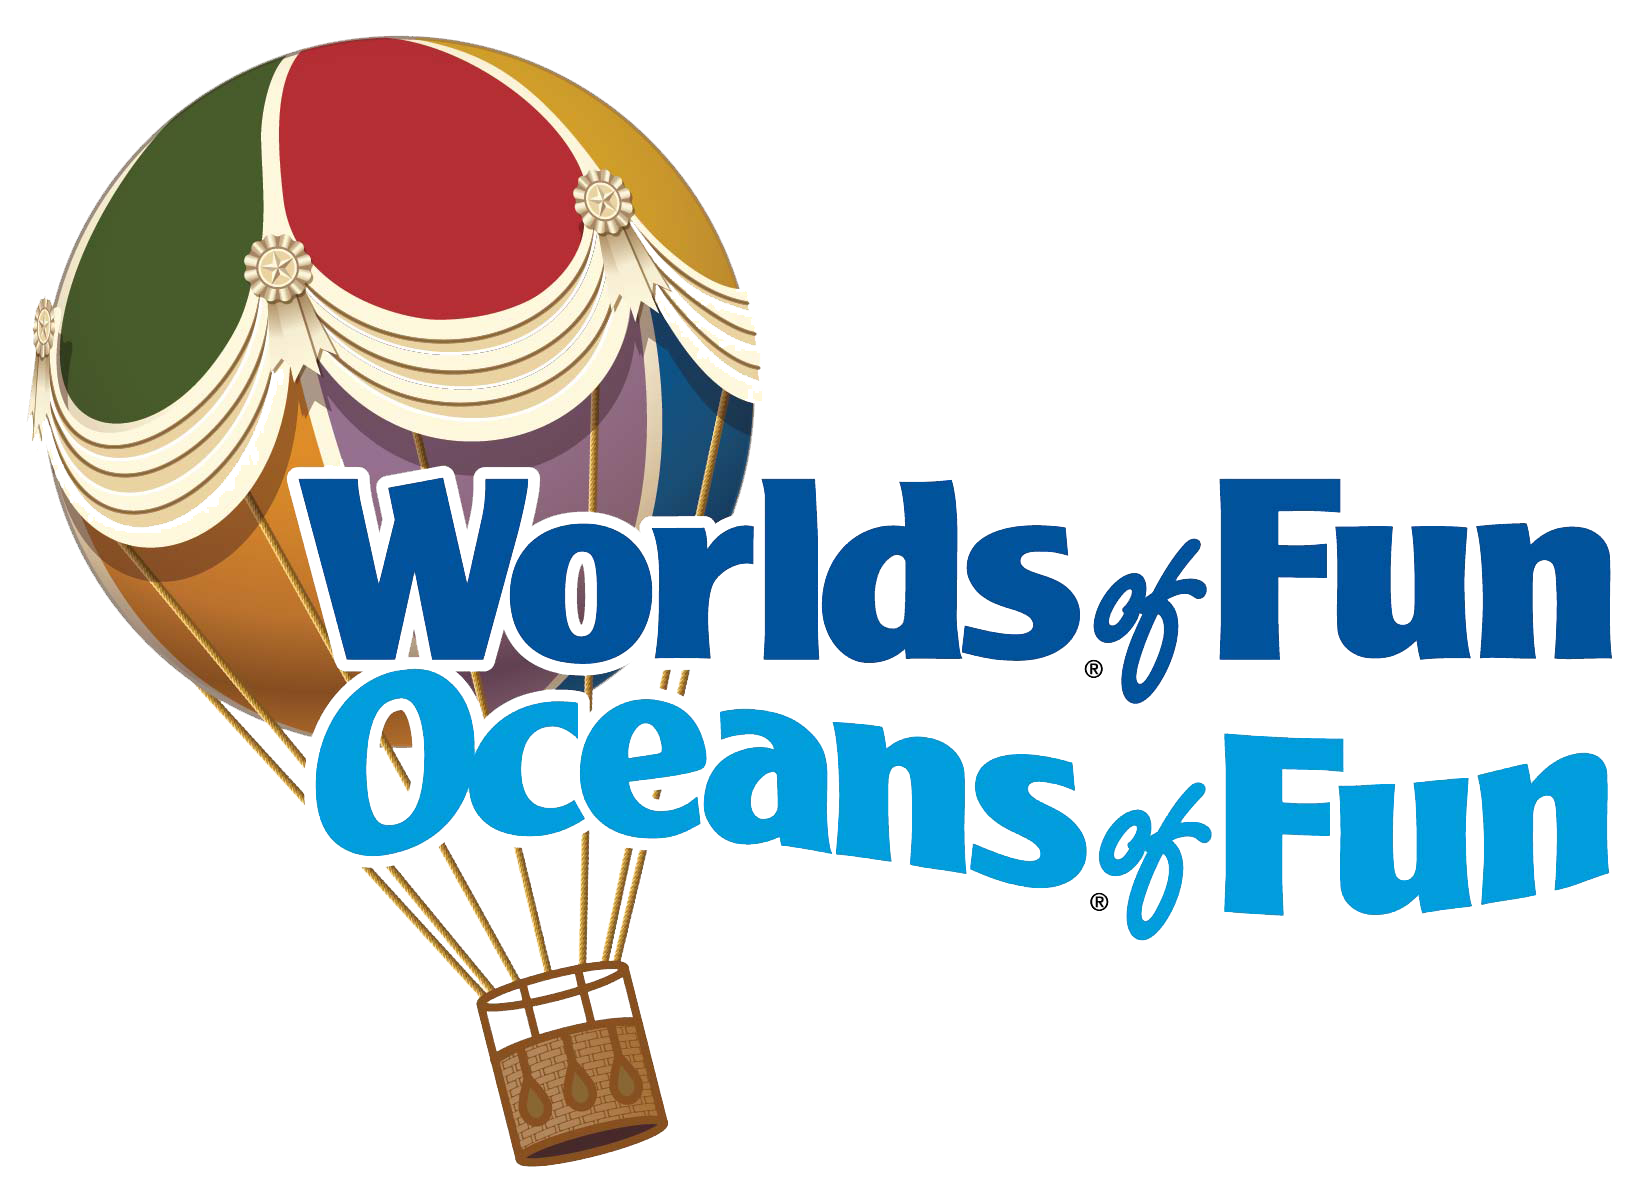 Worlds of Fun Oceans of Fun